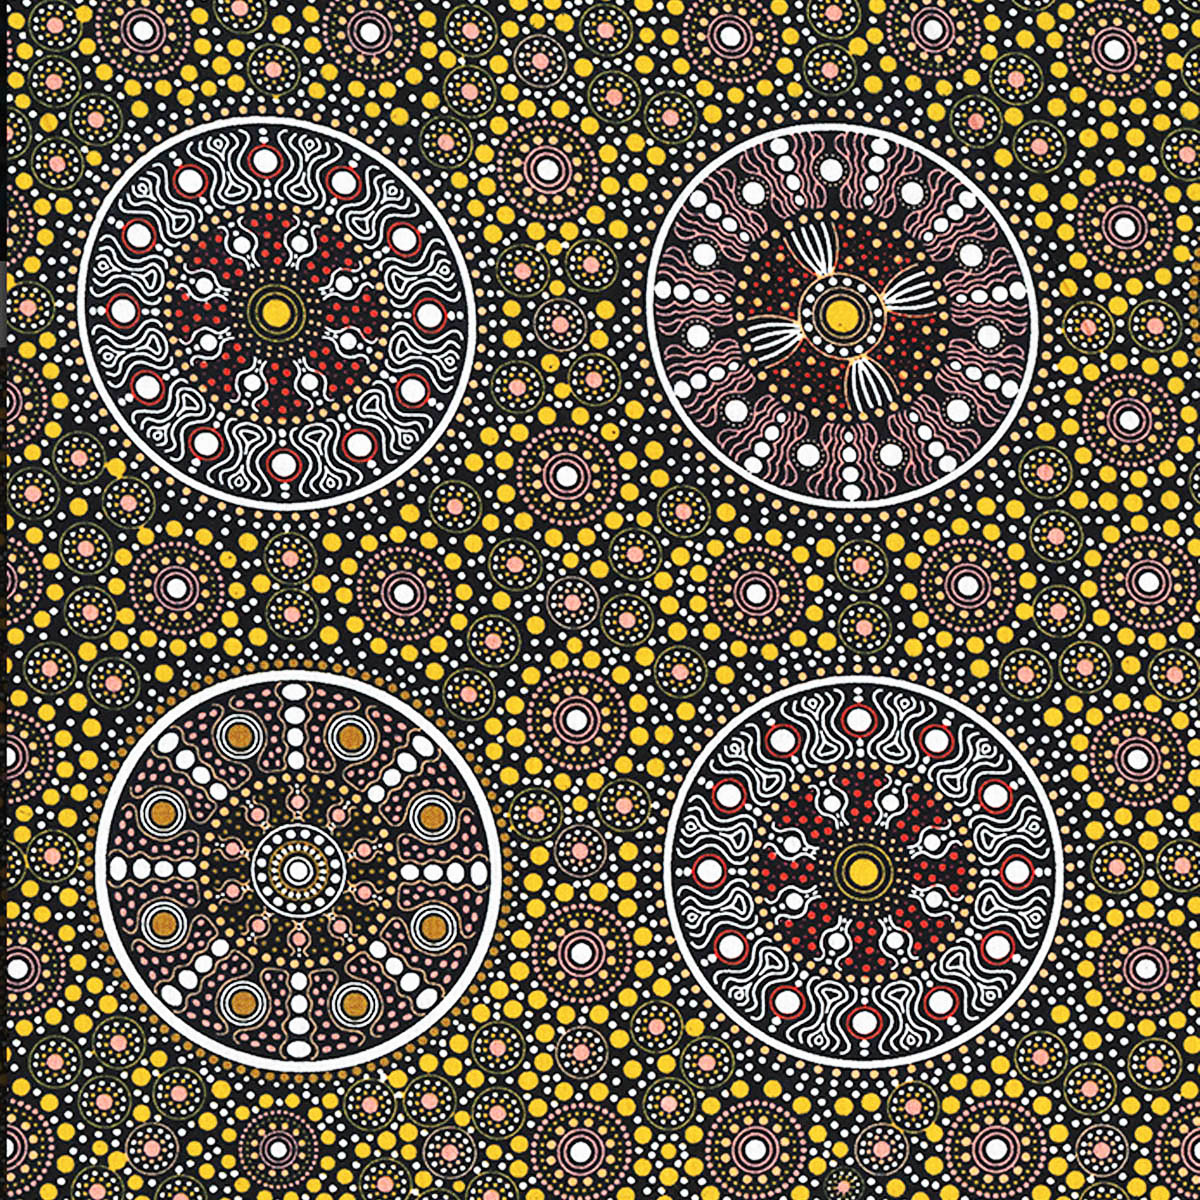 WILDFLOWERS AFTER RAIN YELLOW by Aboriginal Artist LETISHA DOOLAN